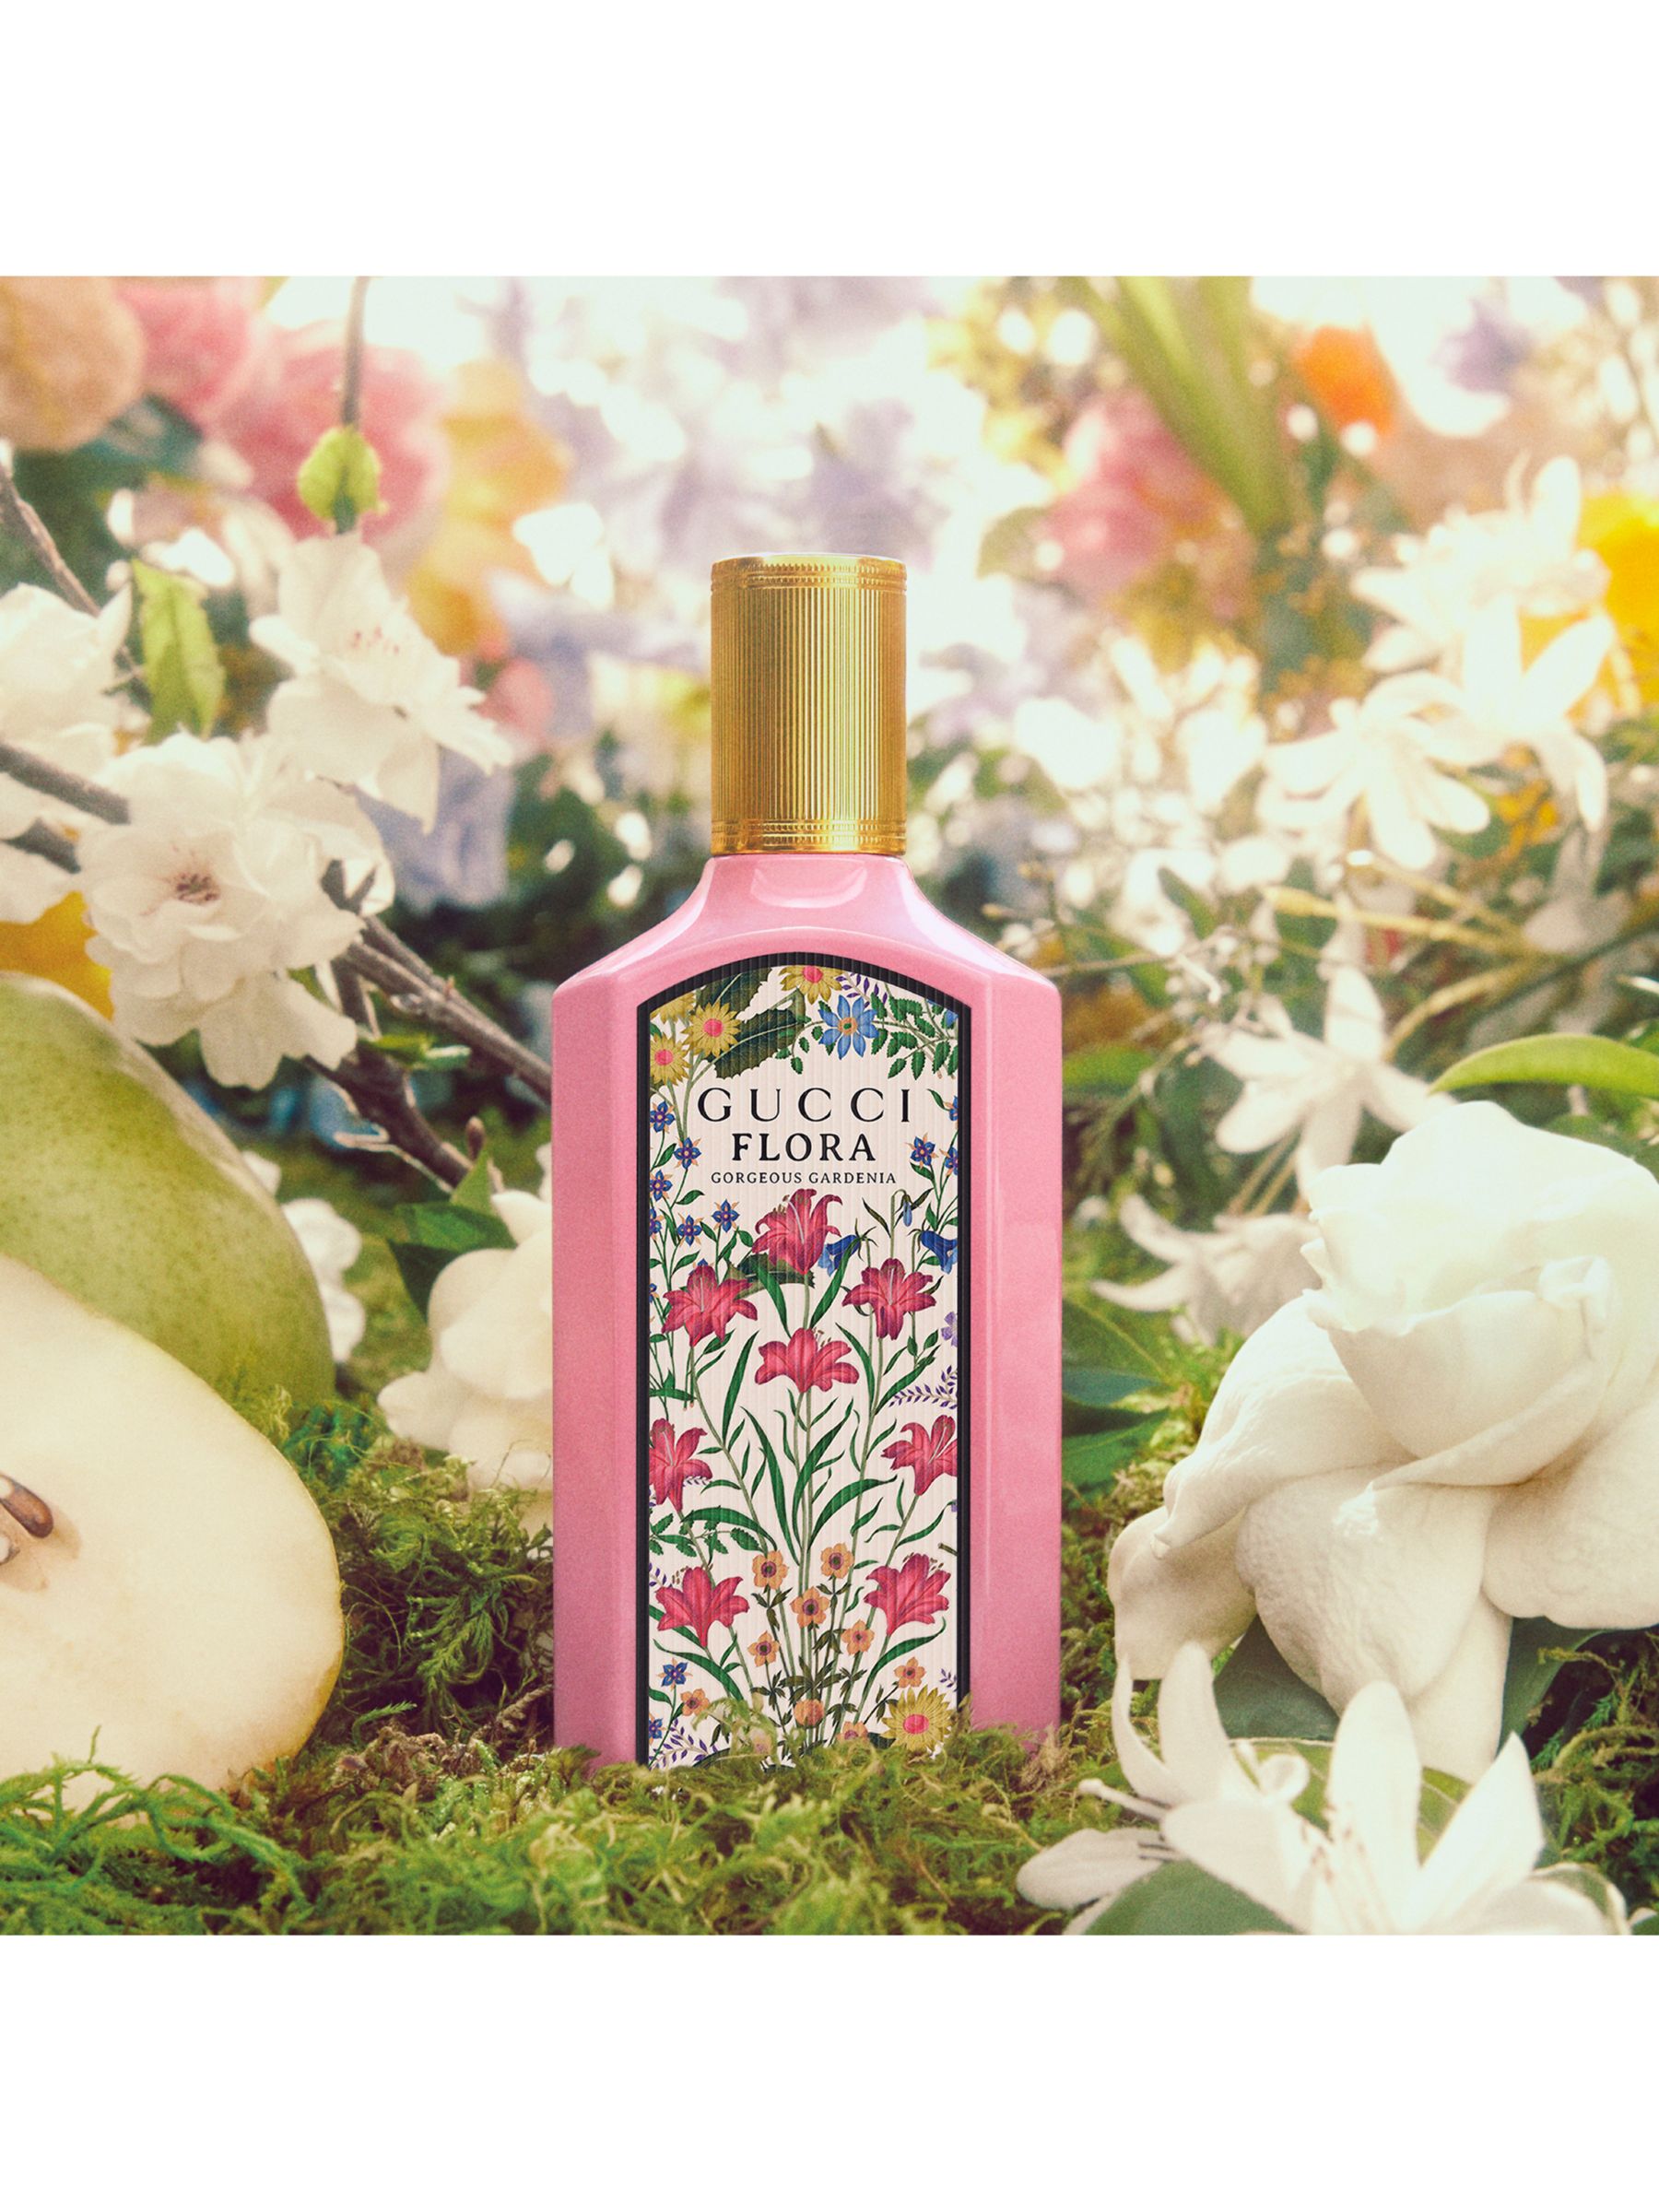 Gucci Flora Gorgeous Gardenia Eau de Parfum For Women, 30ml